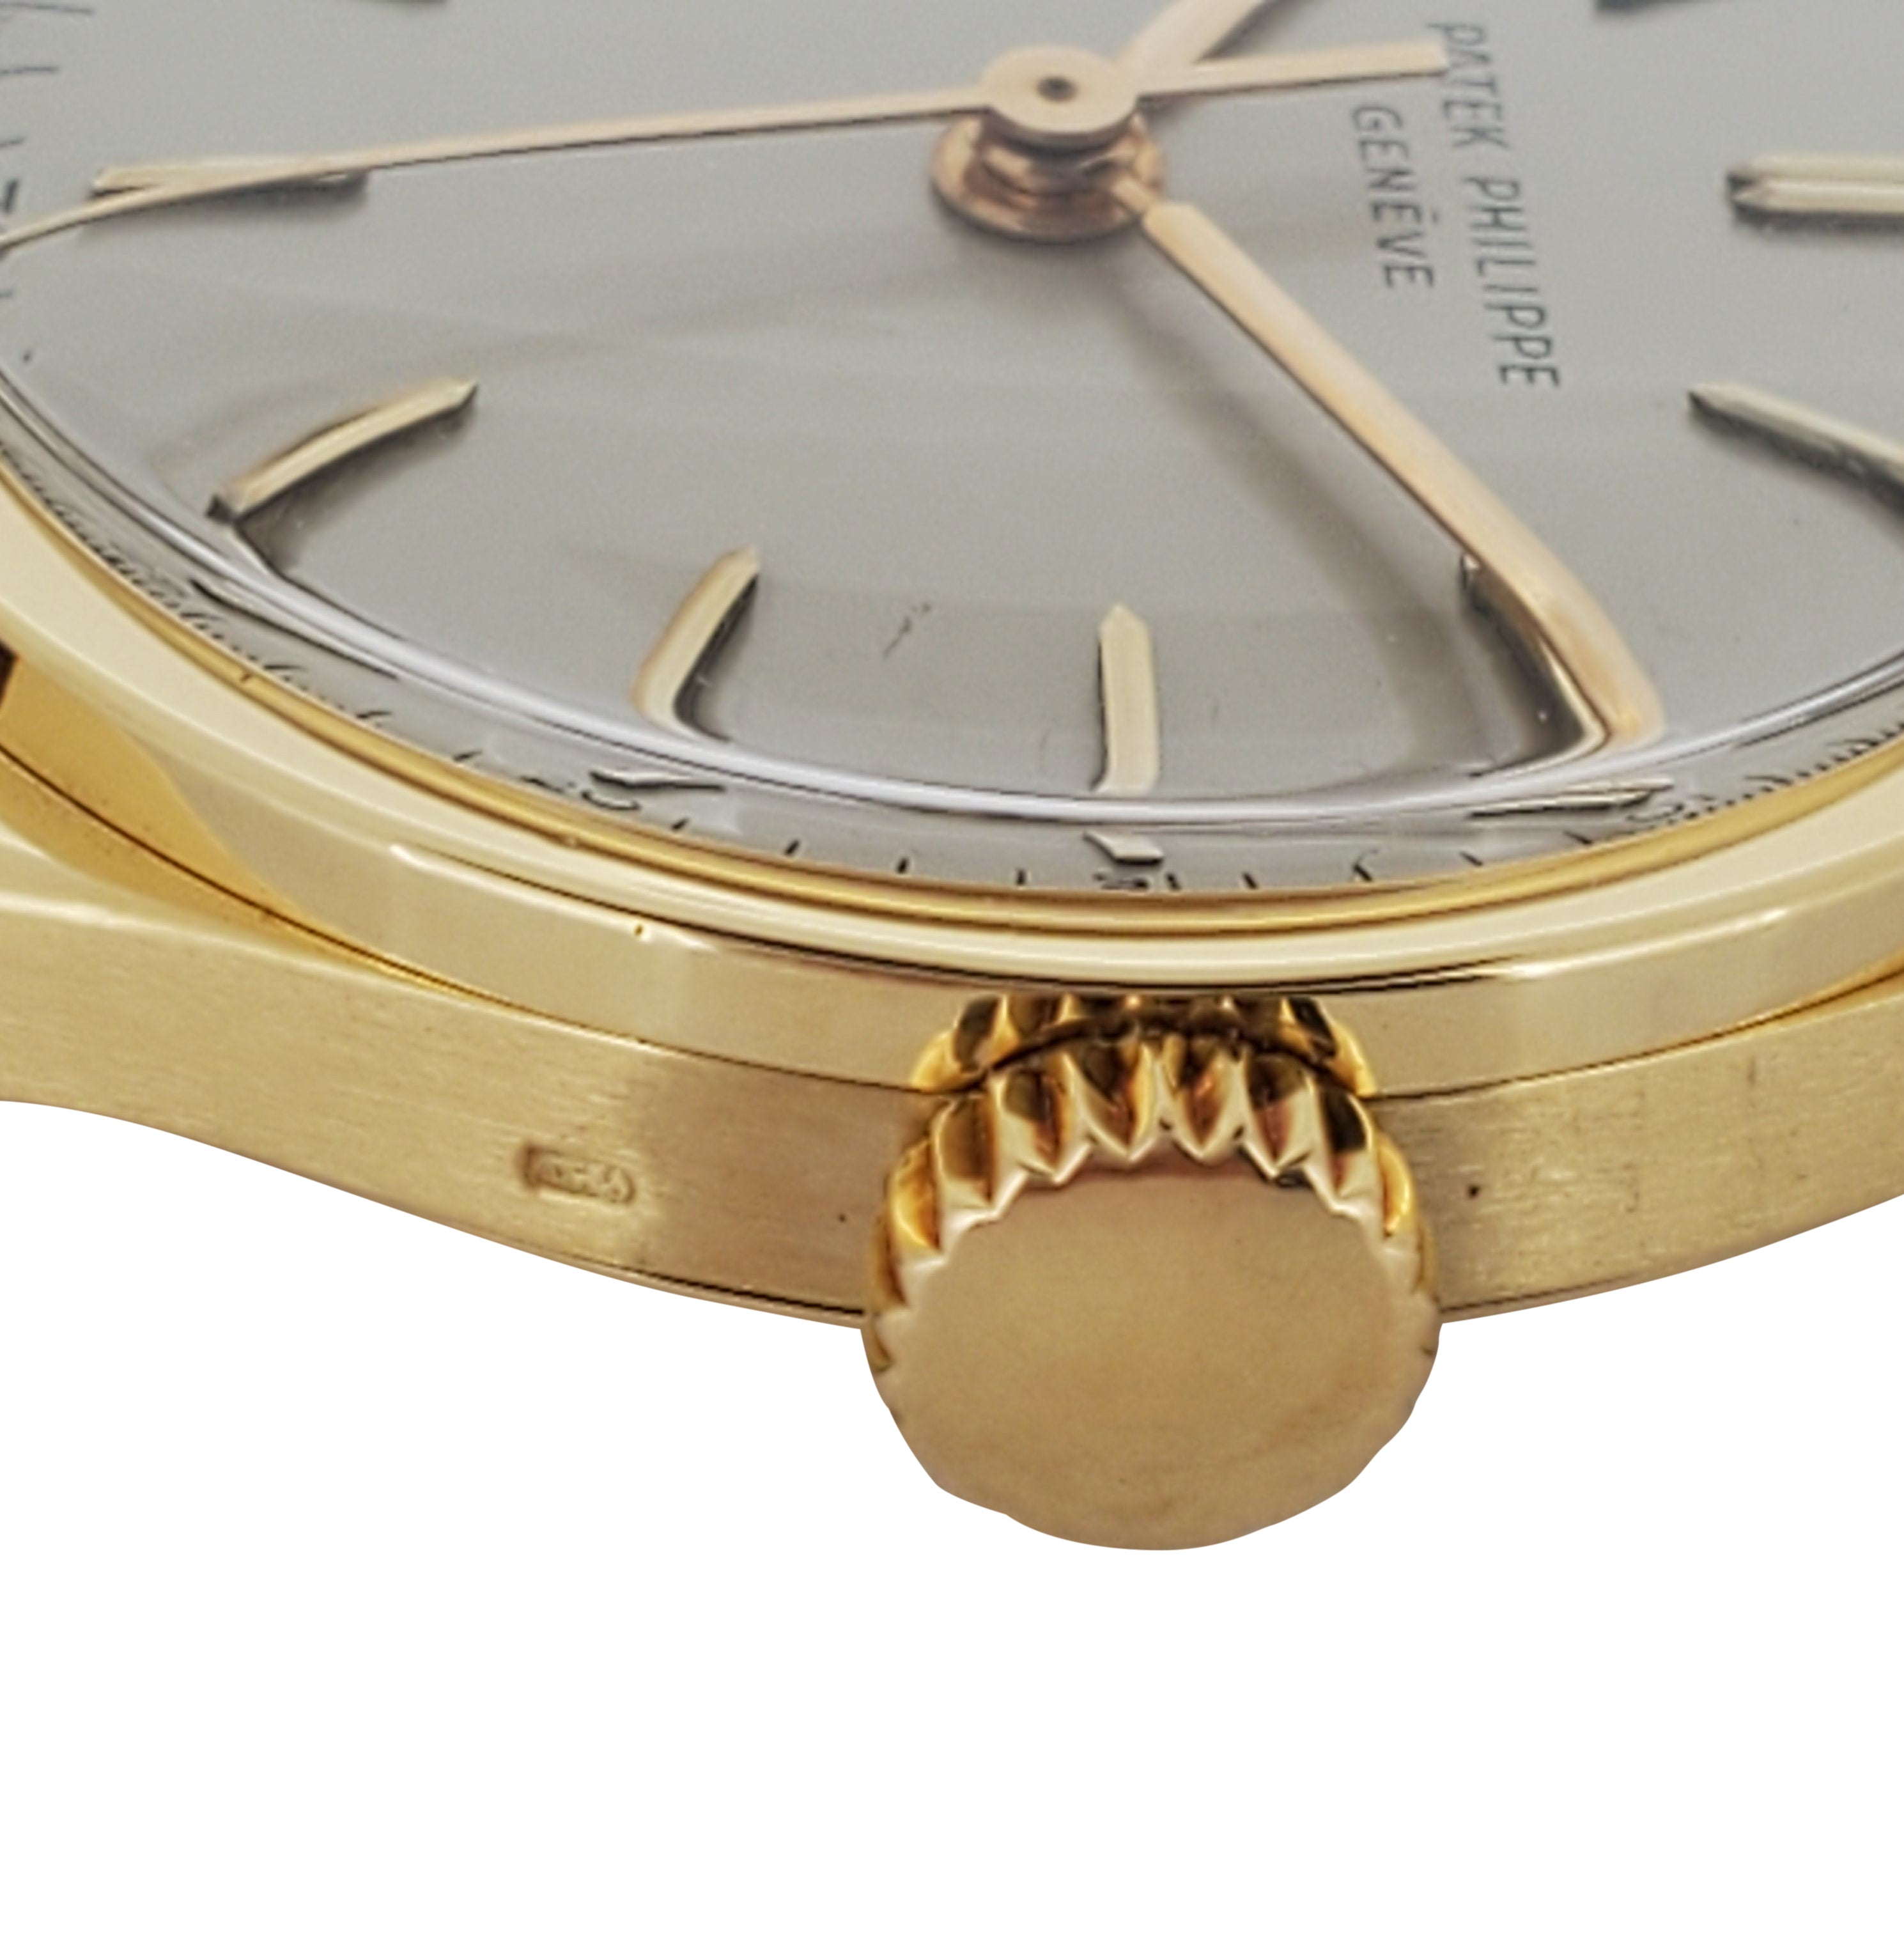 1957 Patek Philippe Vintage Mens Calatrava Watch, Ref. 2484 - 18K Gold